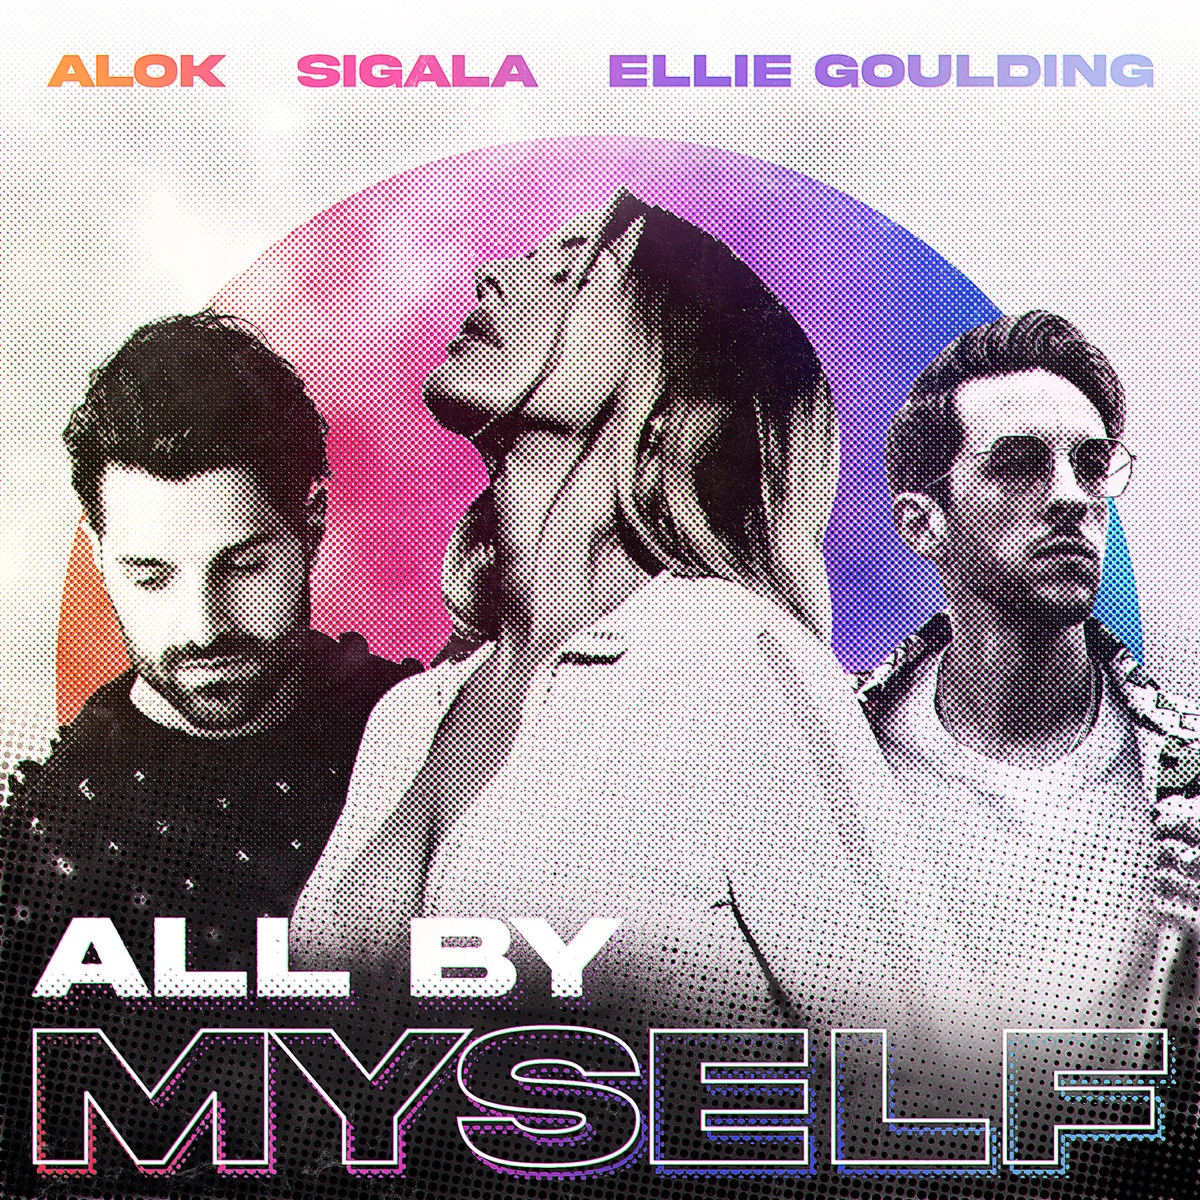 Alok, Sigala, & Ellie Goulding All By Myself cover artwork